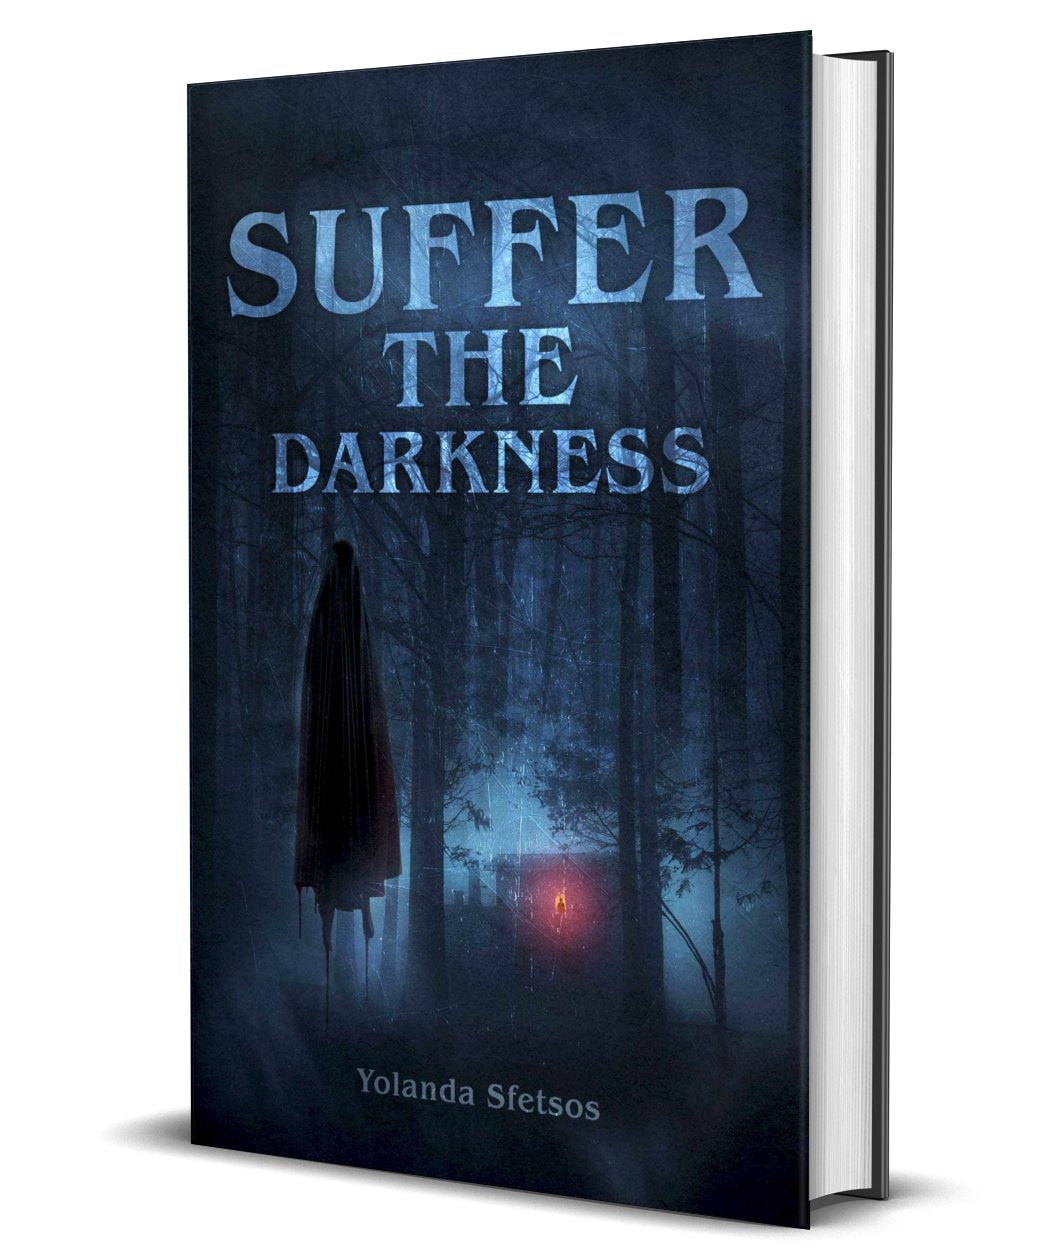 Suffer the Darkness by Yolanda Sfetsos